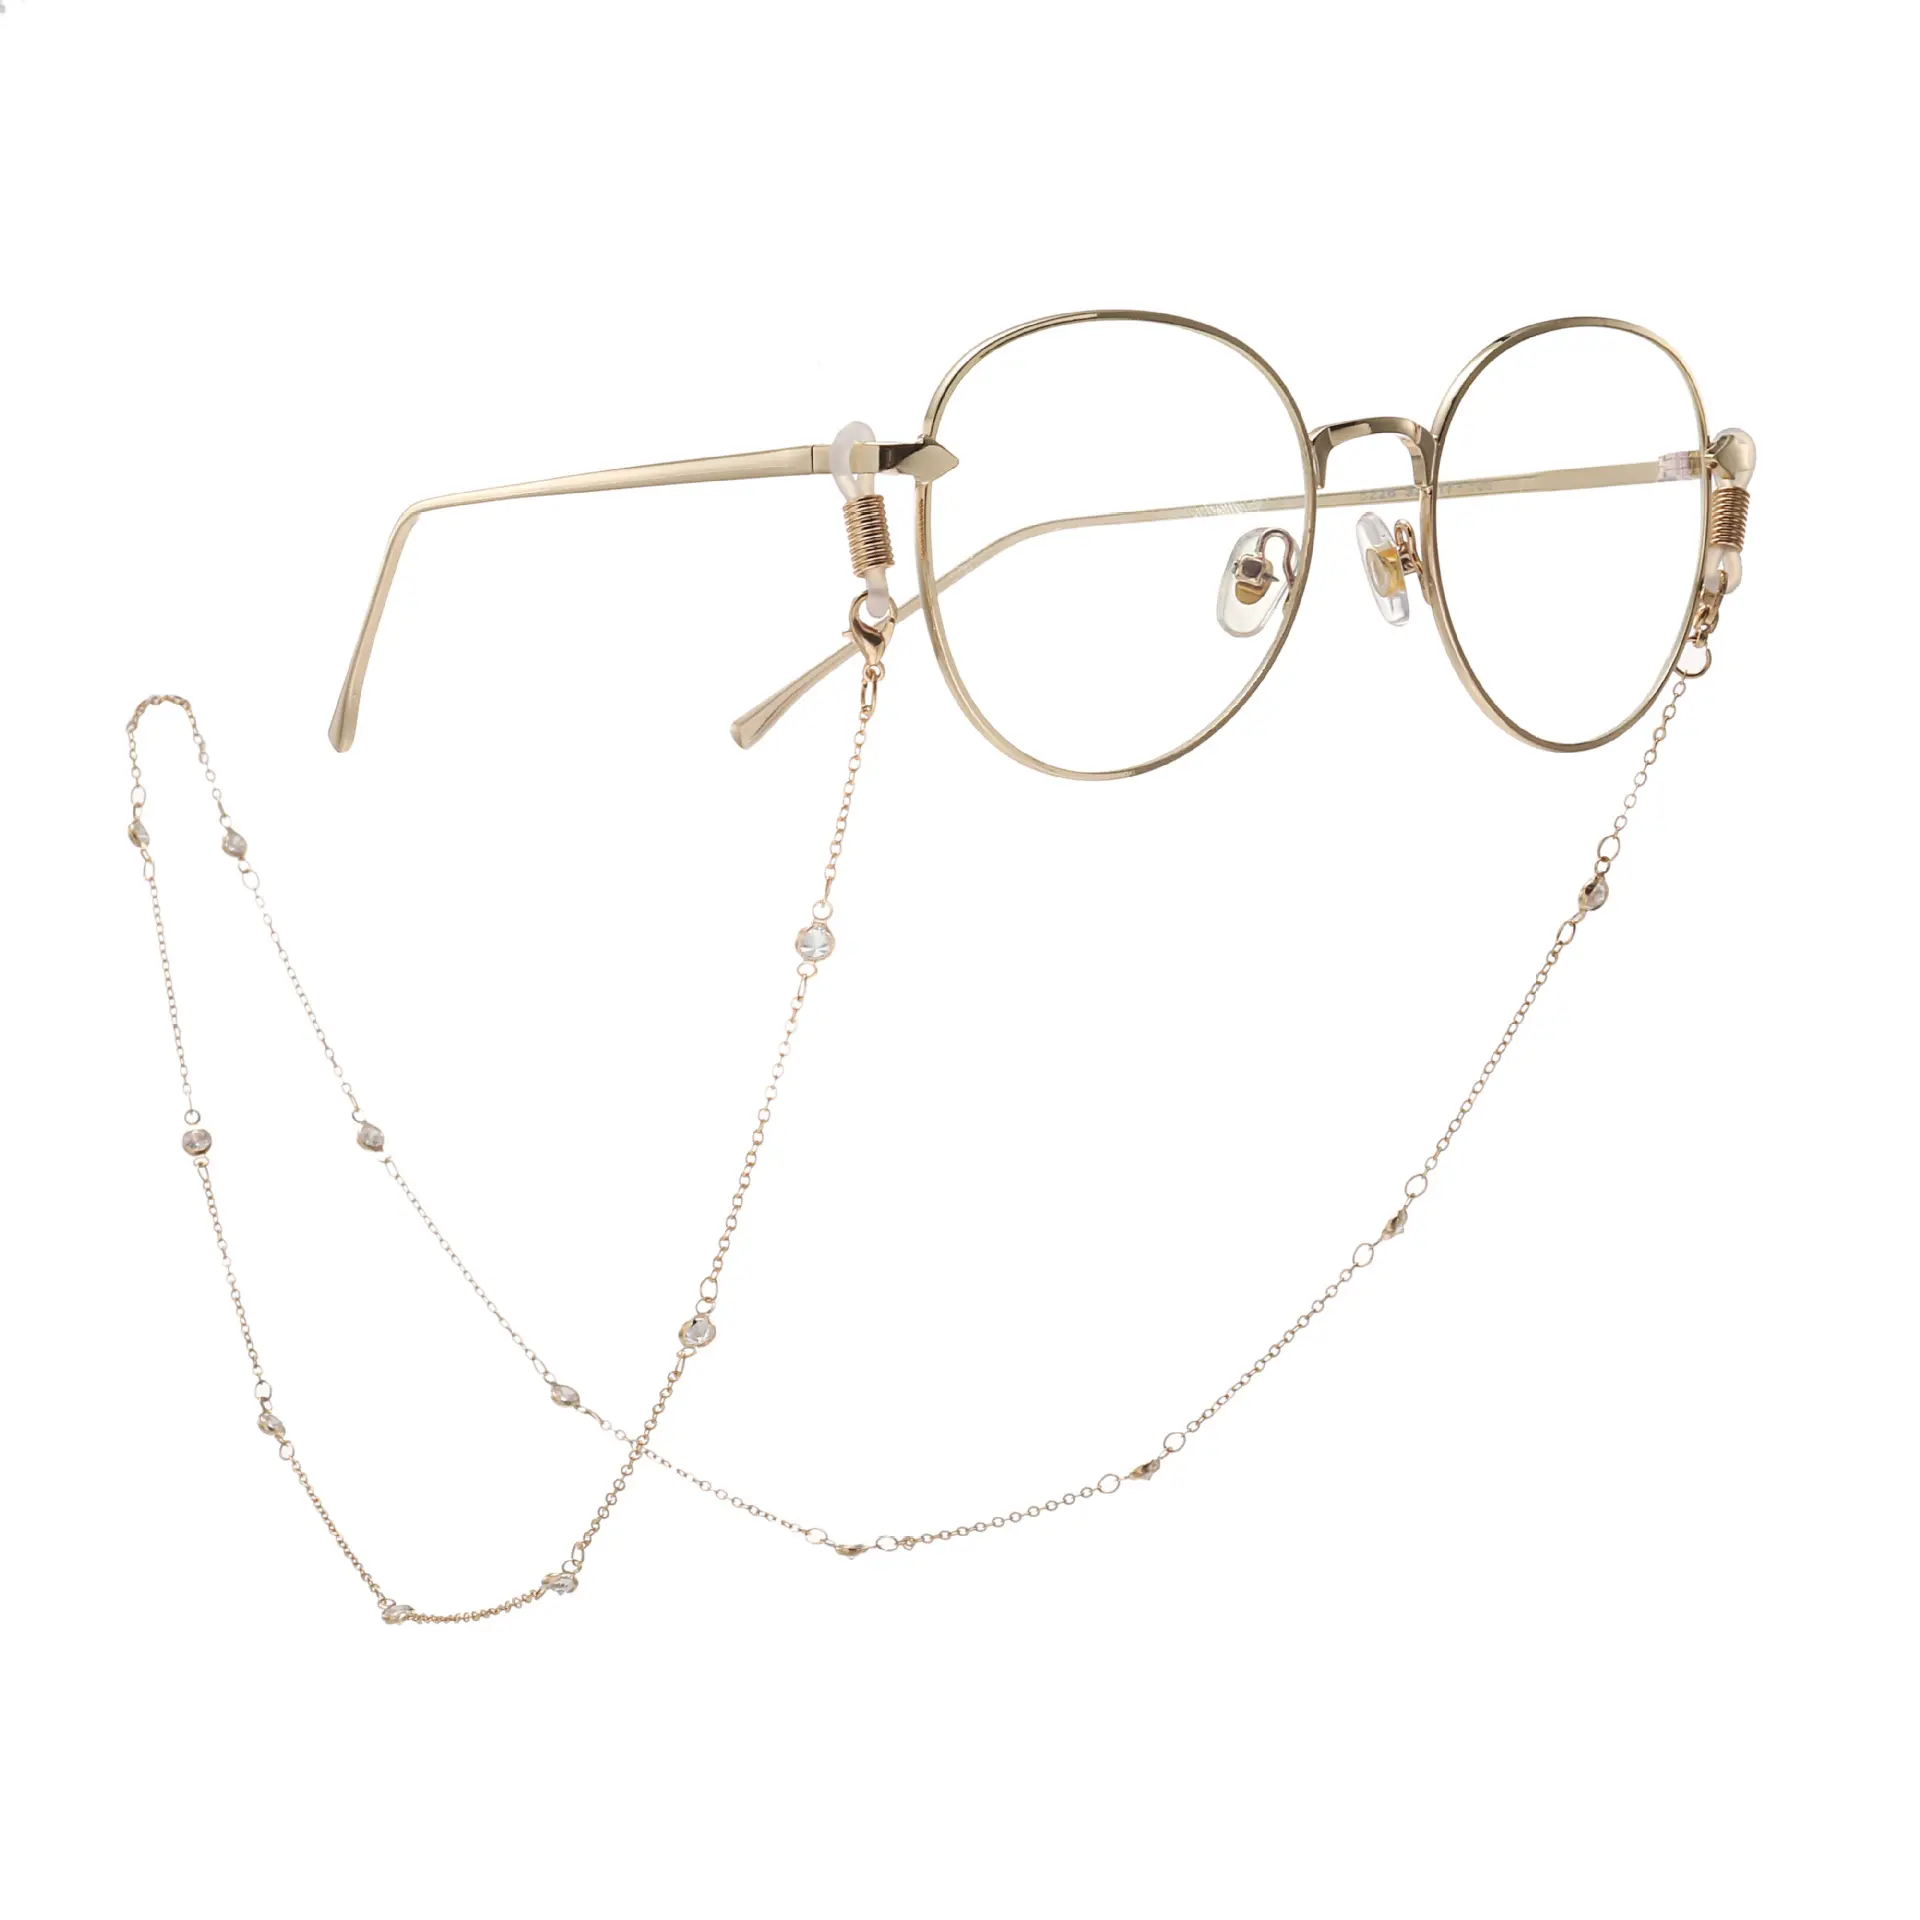 सफेद क्रिस्टल मोती लिंक चेन चश्मा मास्किंग पढ़ने चश्मा डोरी धूप का चश्मा पट्टा कॉर्ड धारक गर्दन बैंड सामान